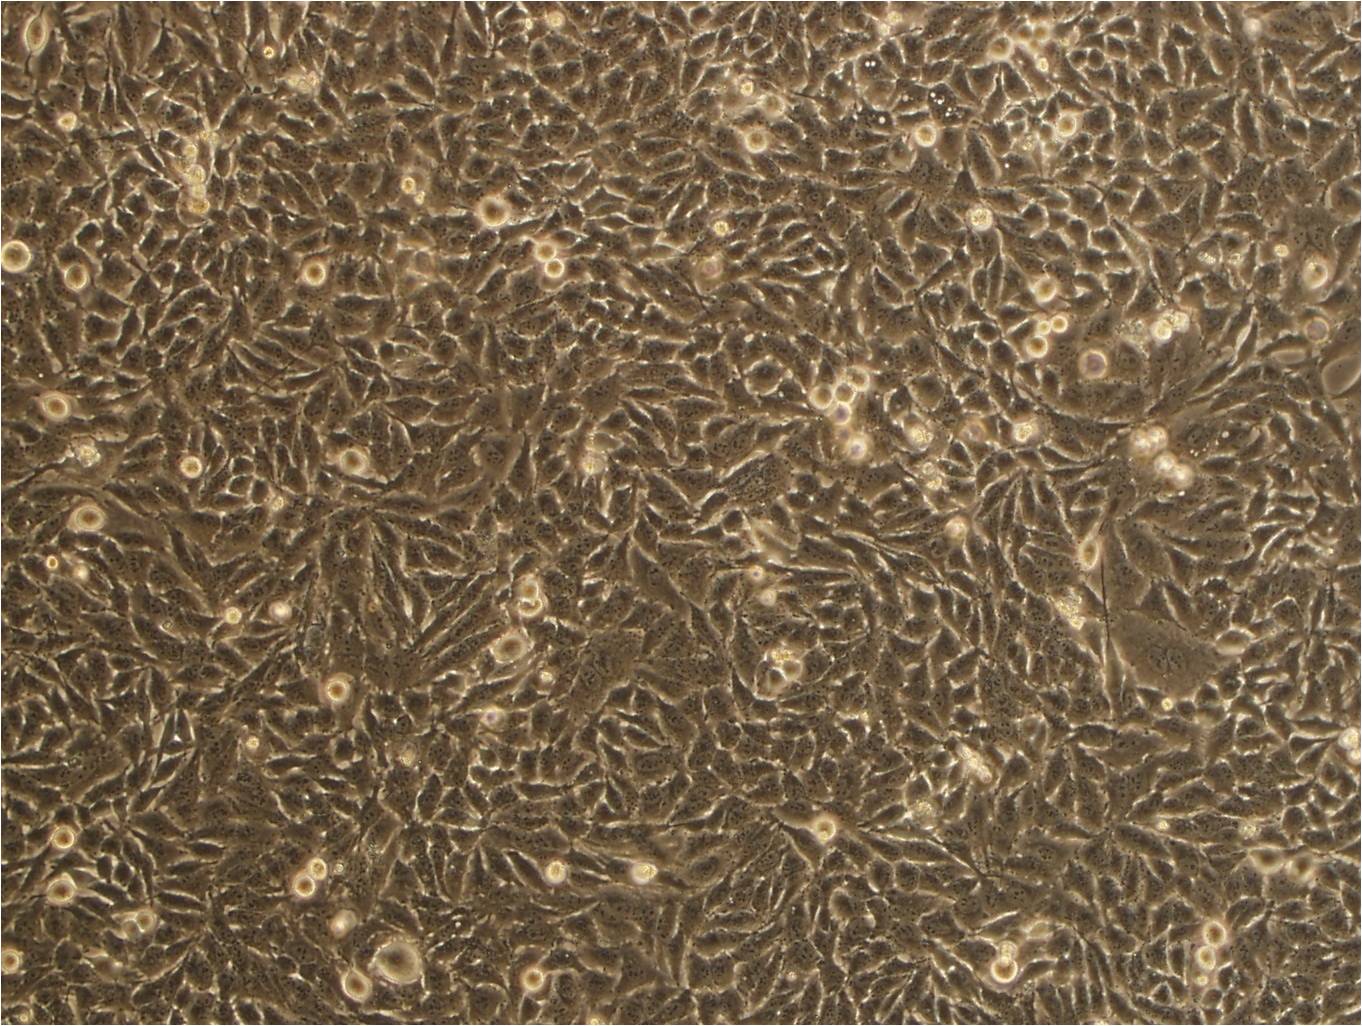 SL1 Cell:人胚肺转化细胞系